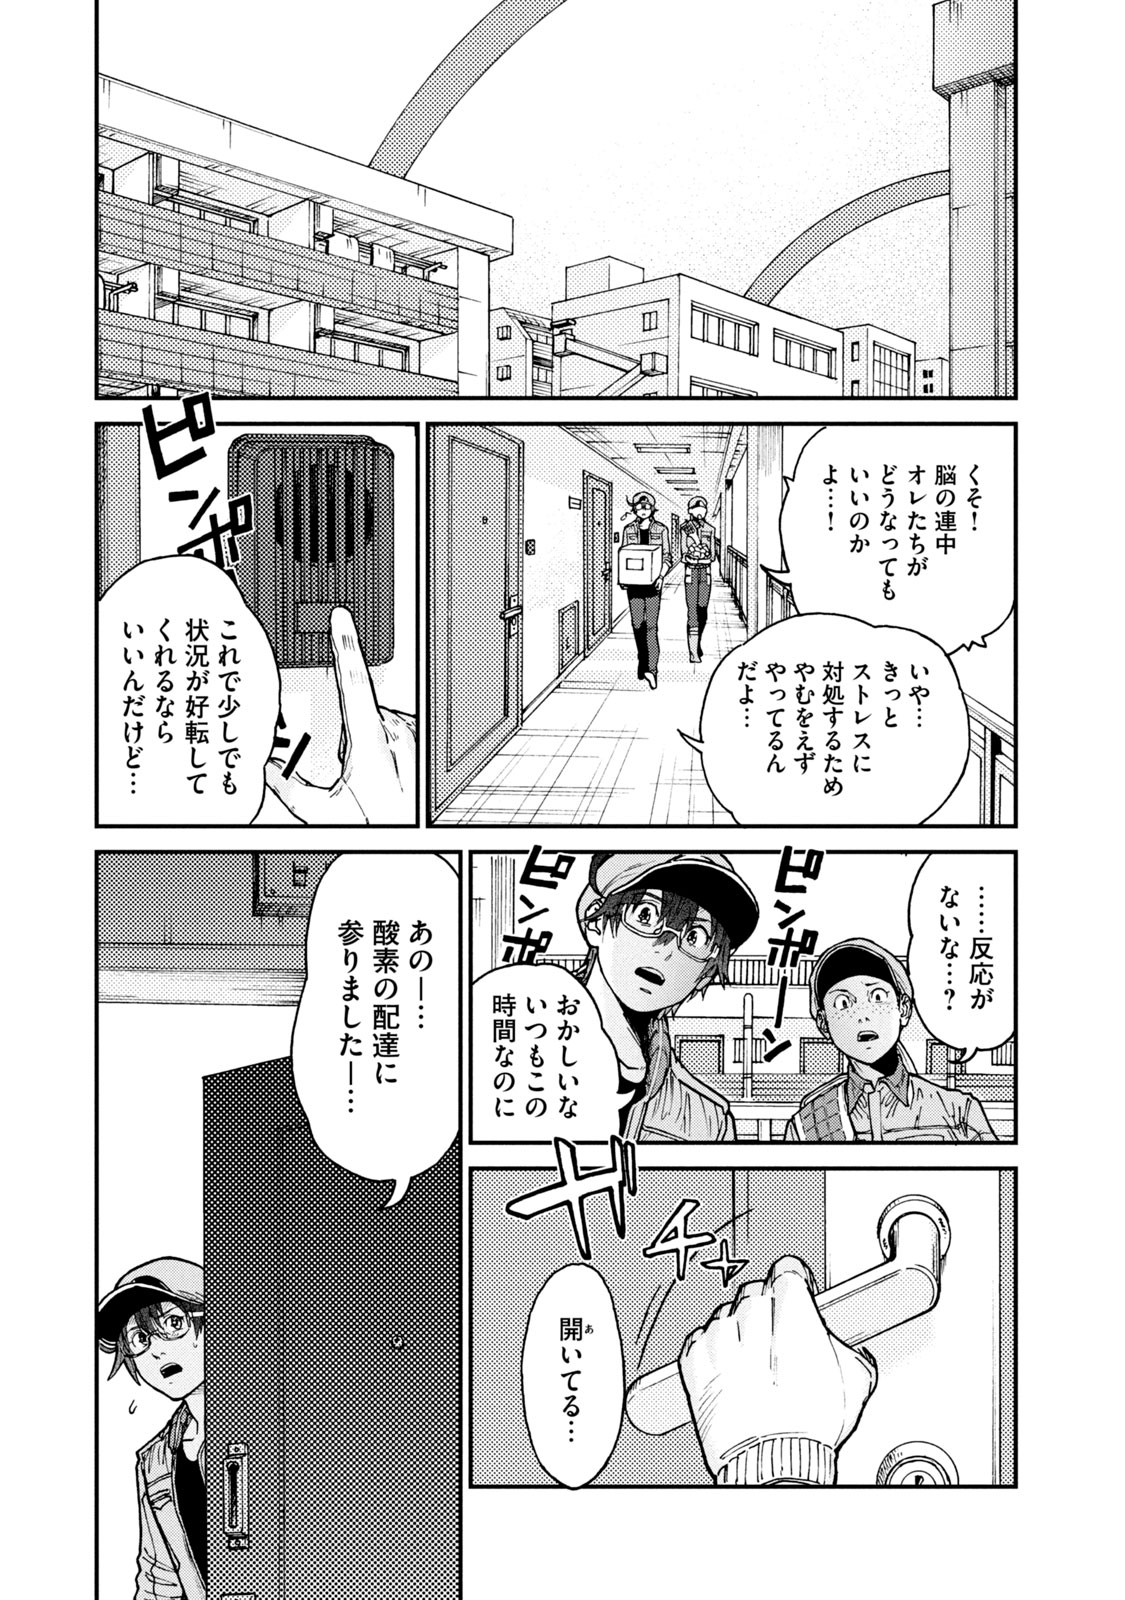 Hataraku Saibou BLACK - Chapter 33 - Page 23